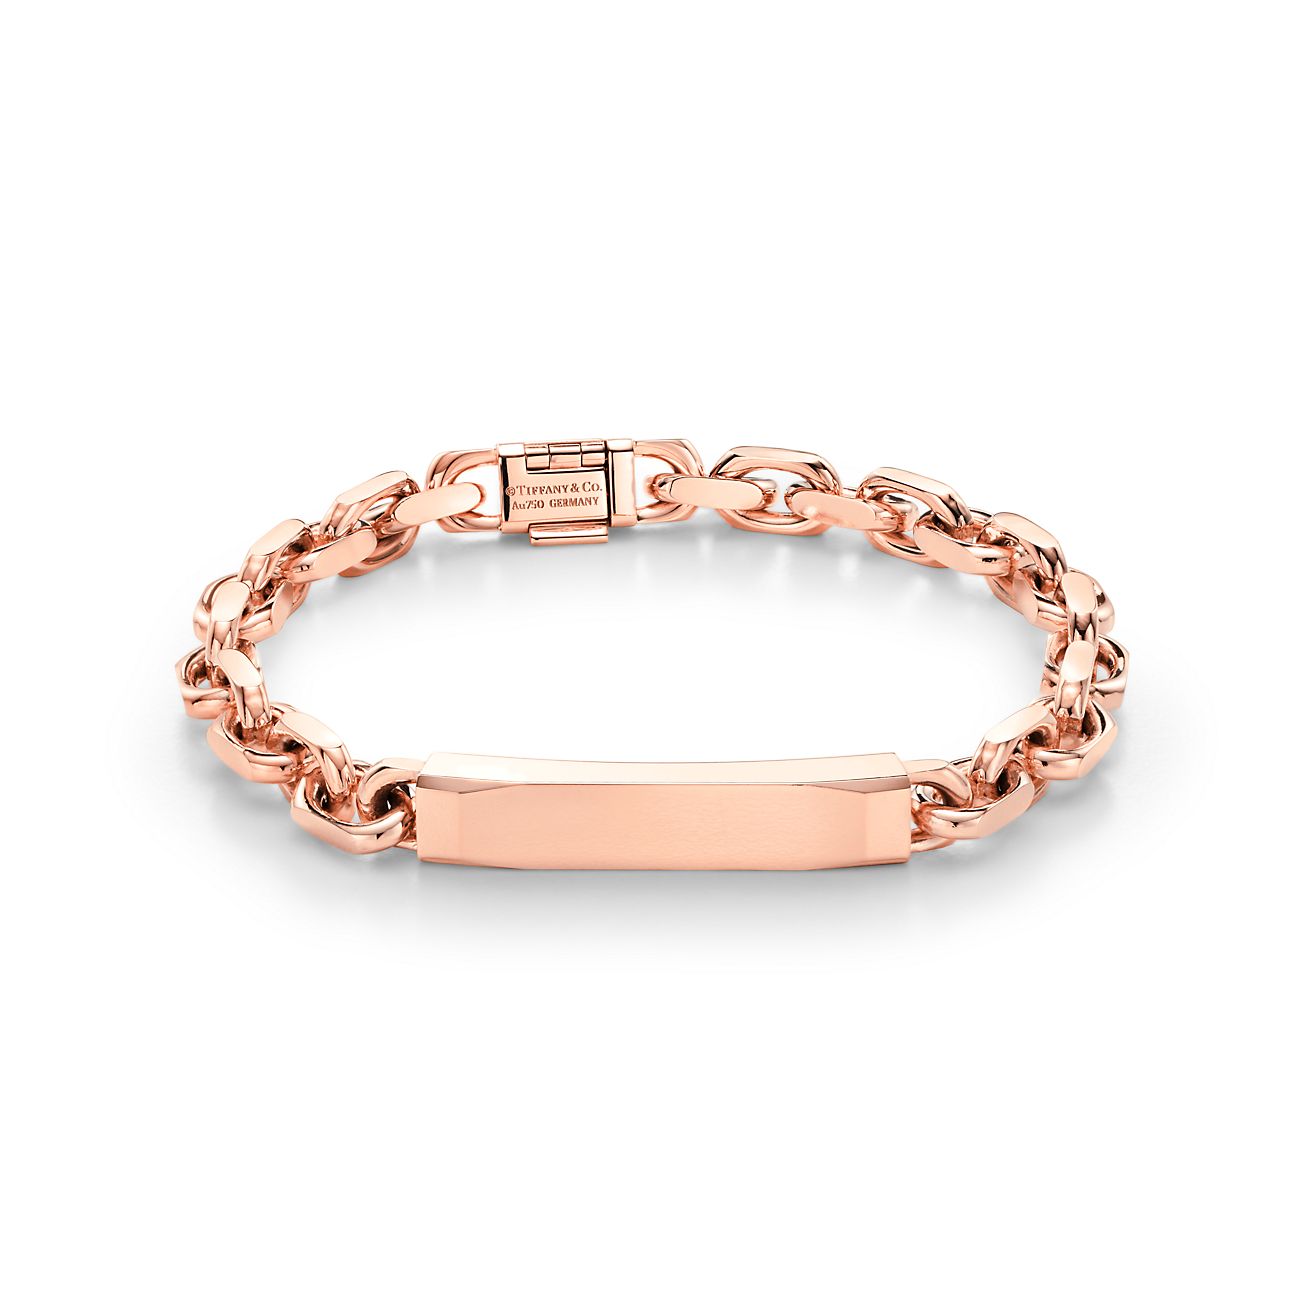 Tiffany 1837™ Makers I.D. chain bracelet 18k rose gold, small. | Tiffany & Co.